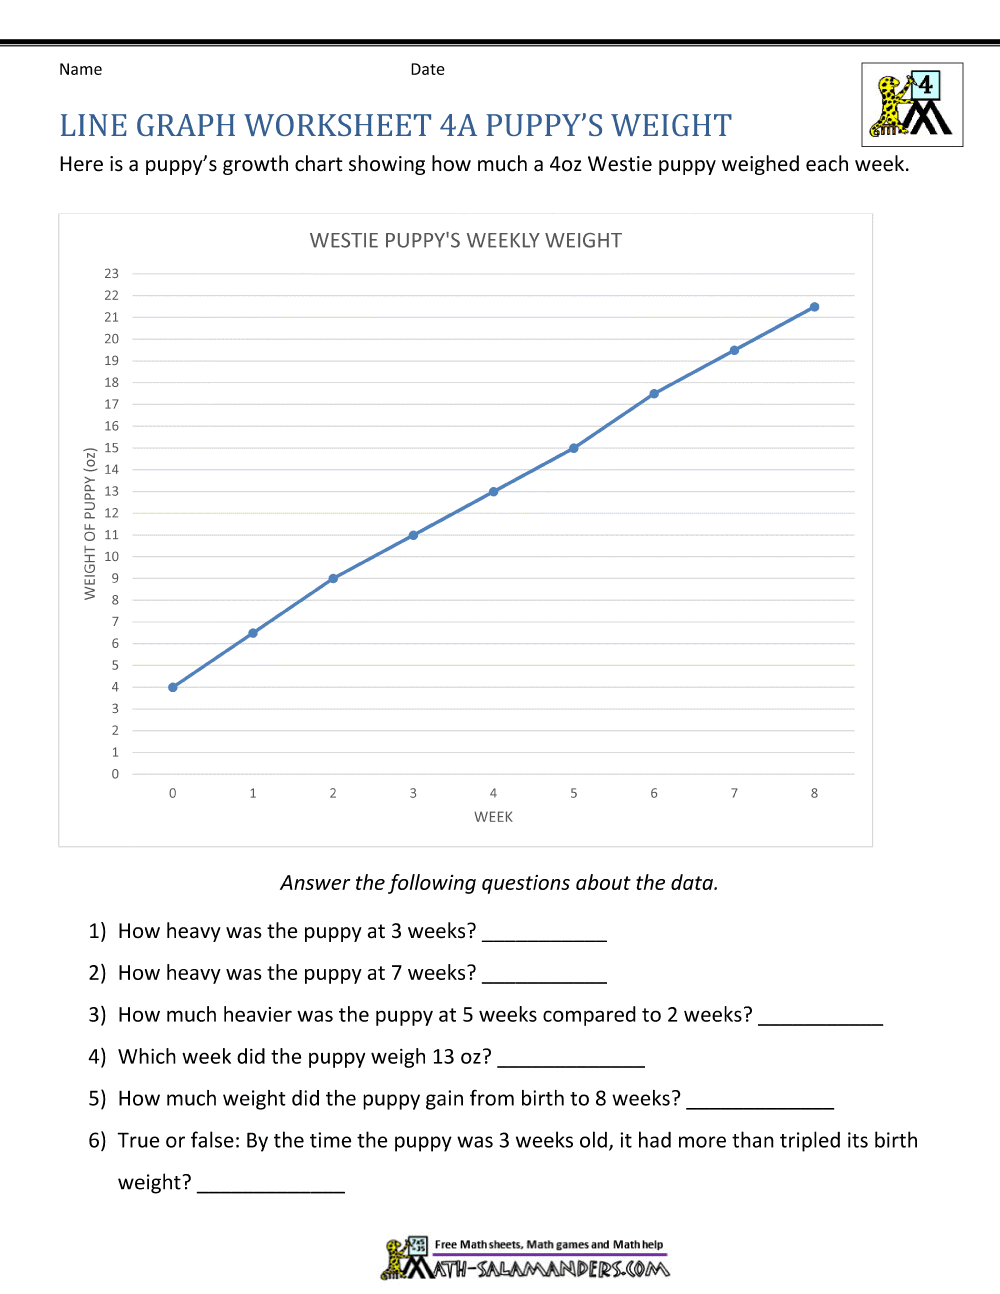 graphing homework help